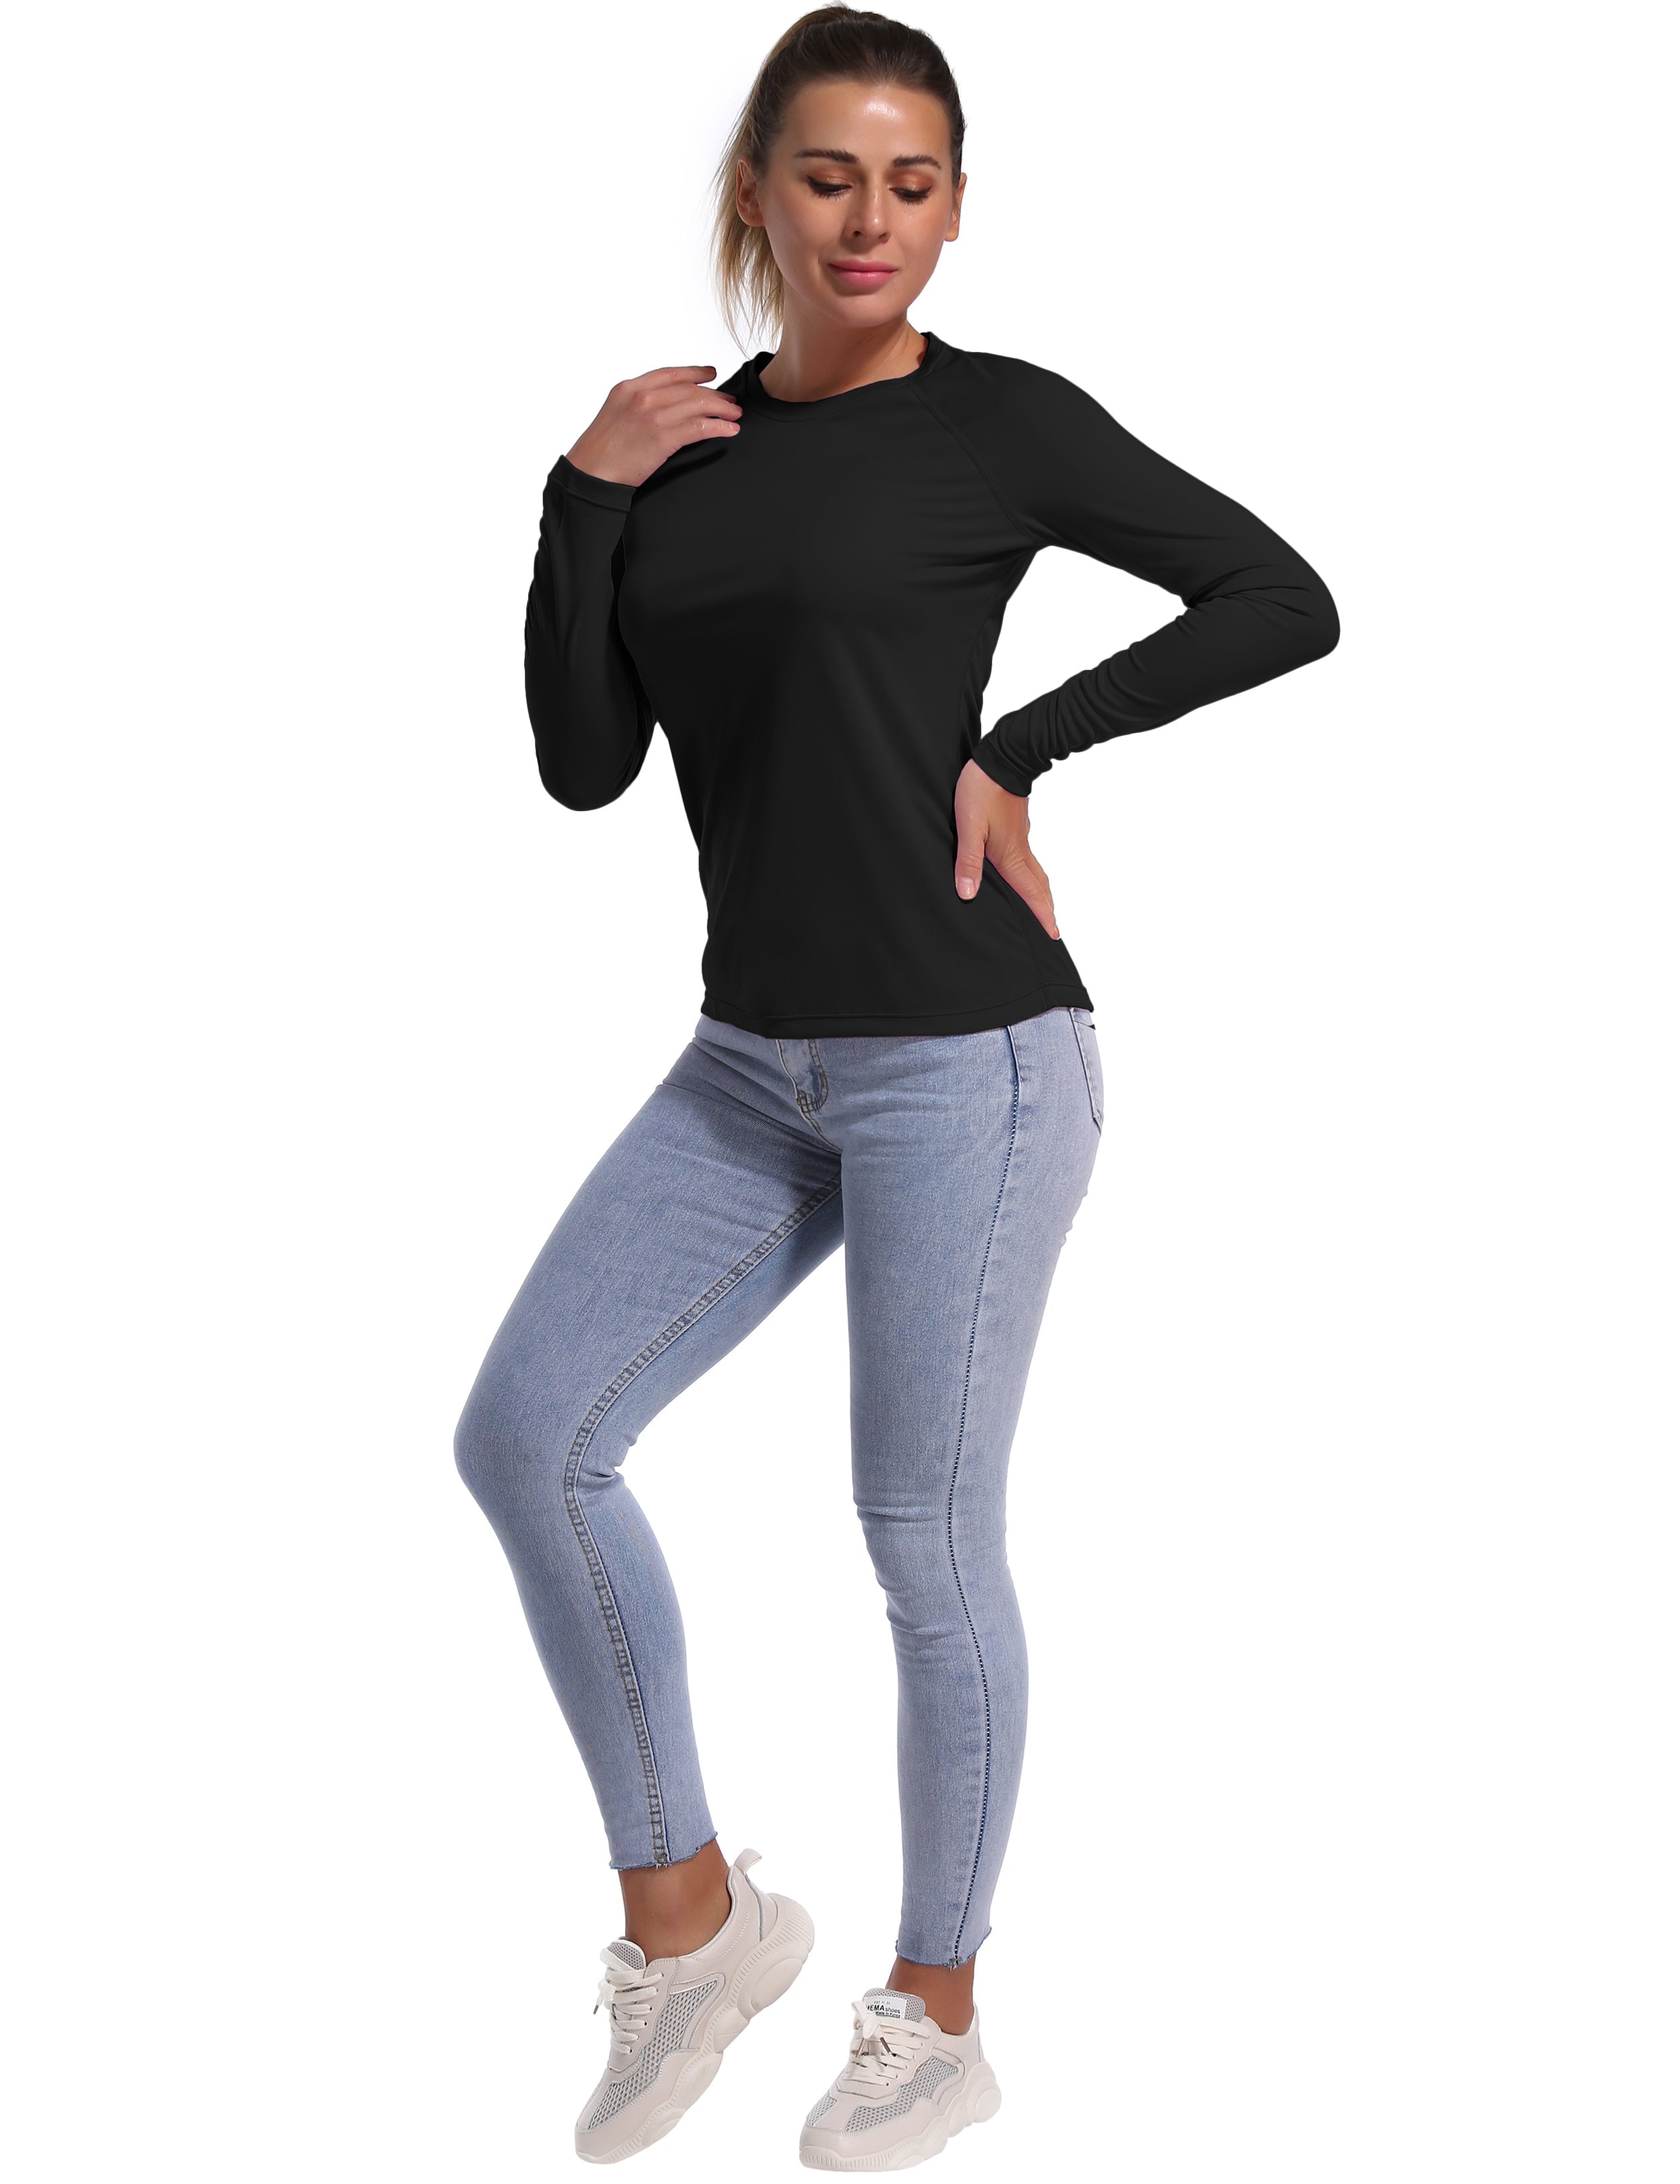 Long Sleeve Athletic Shirts black 100% polyester Lightweight Slim Fit UPF 50+ blocks sun's harmful rays Treated to wick moisture, dries ultra-fast